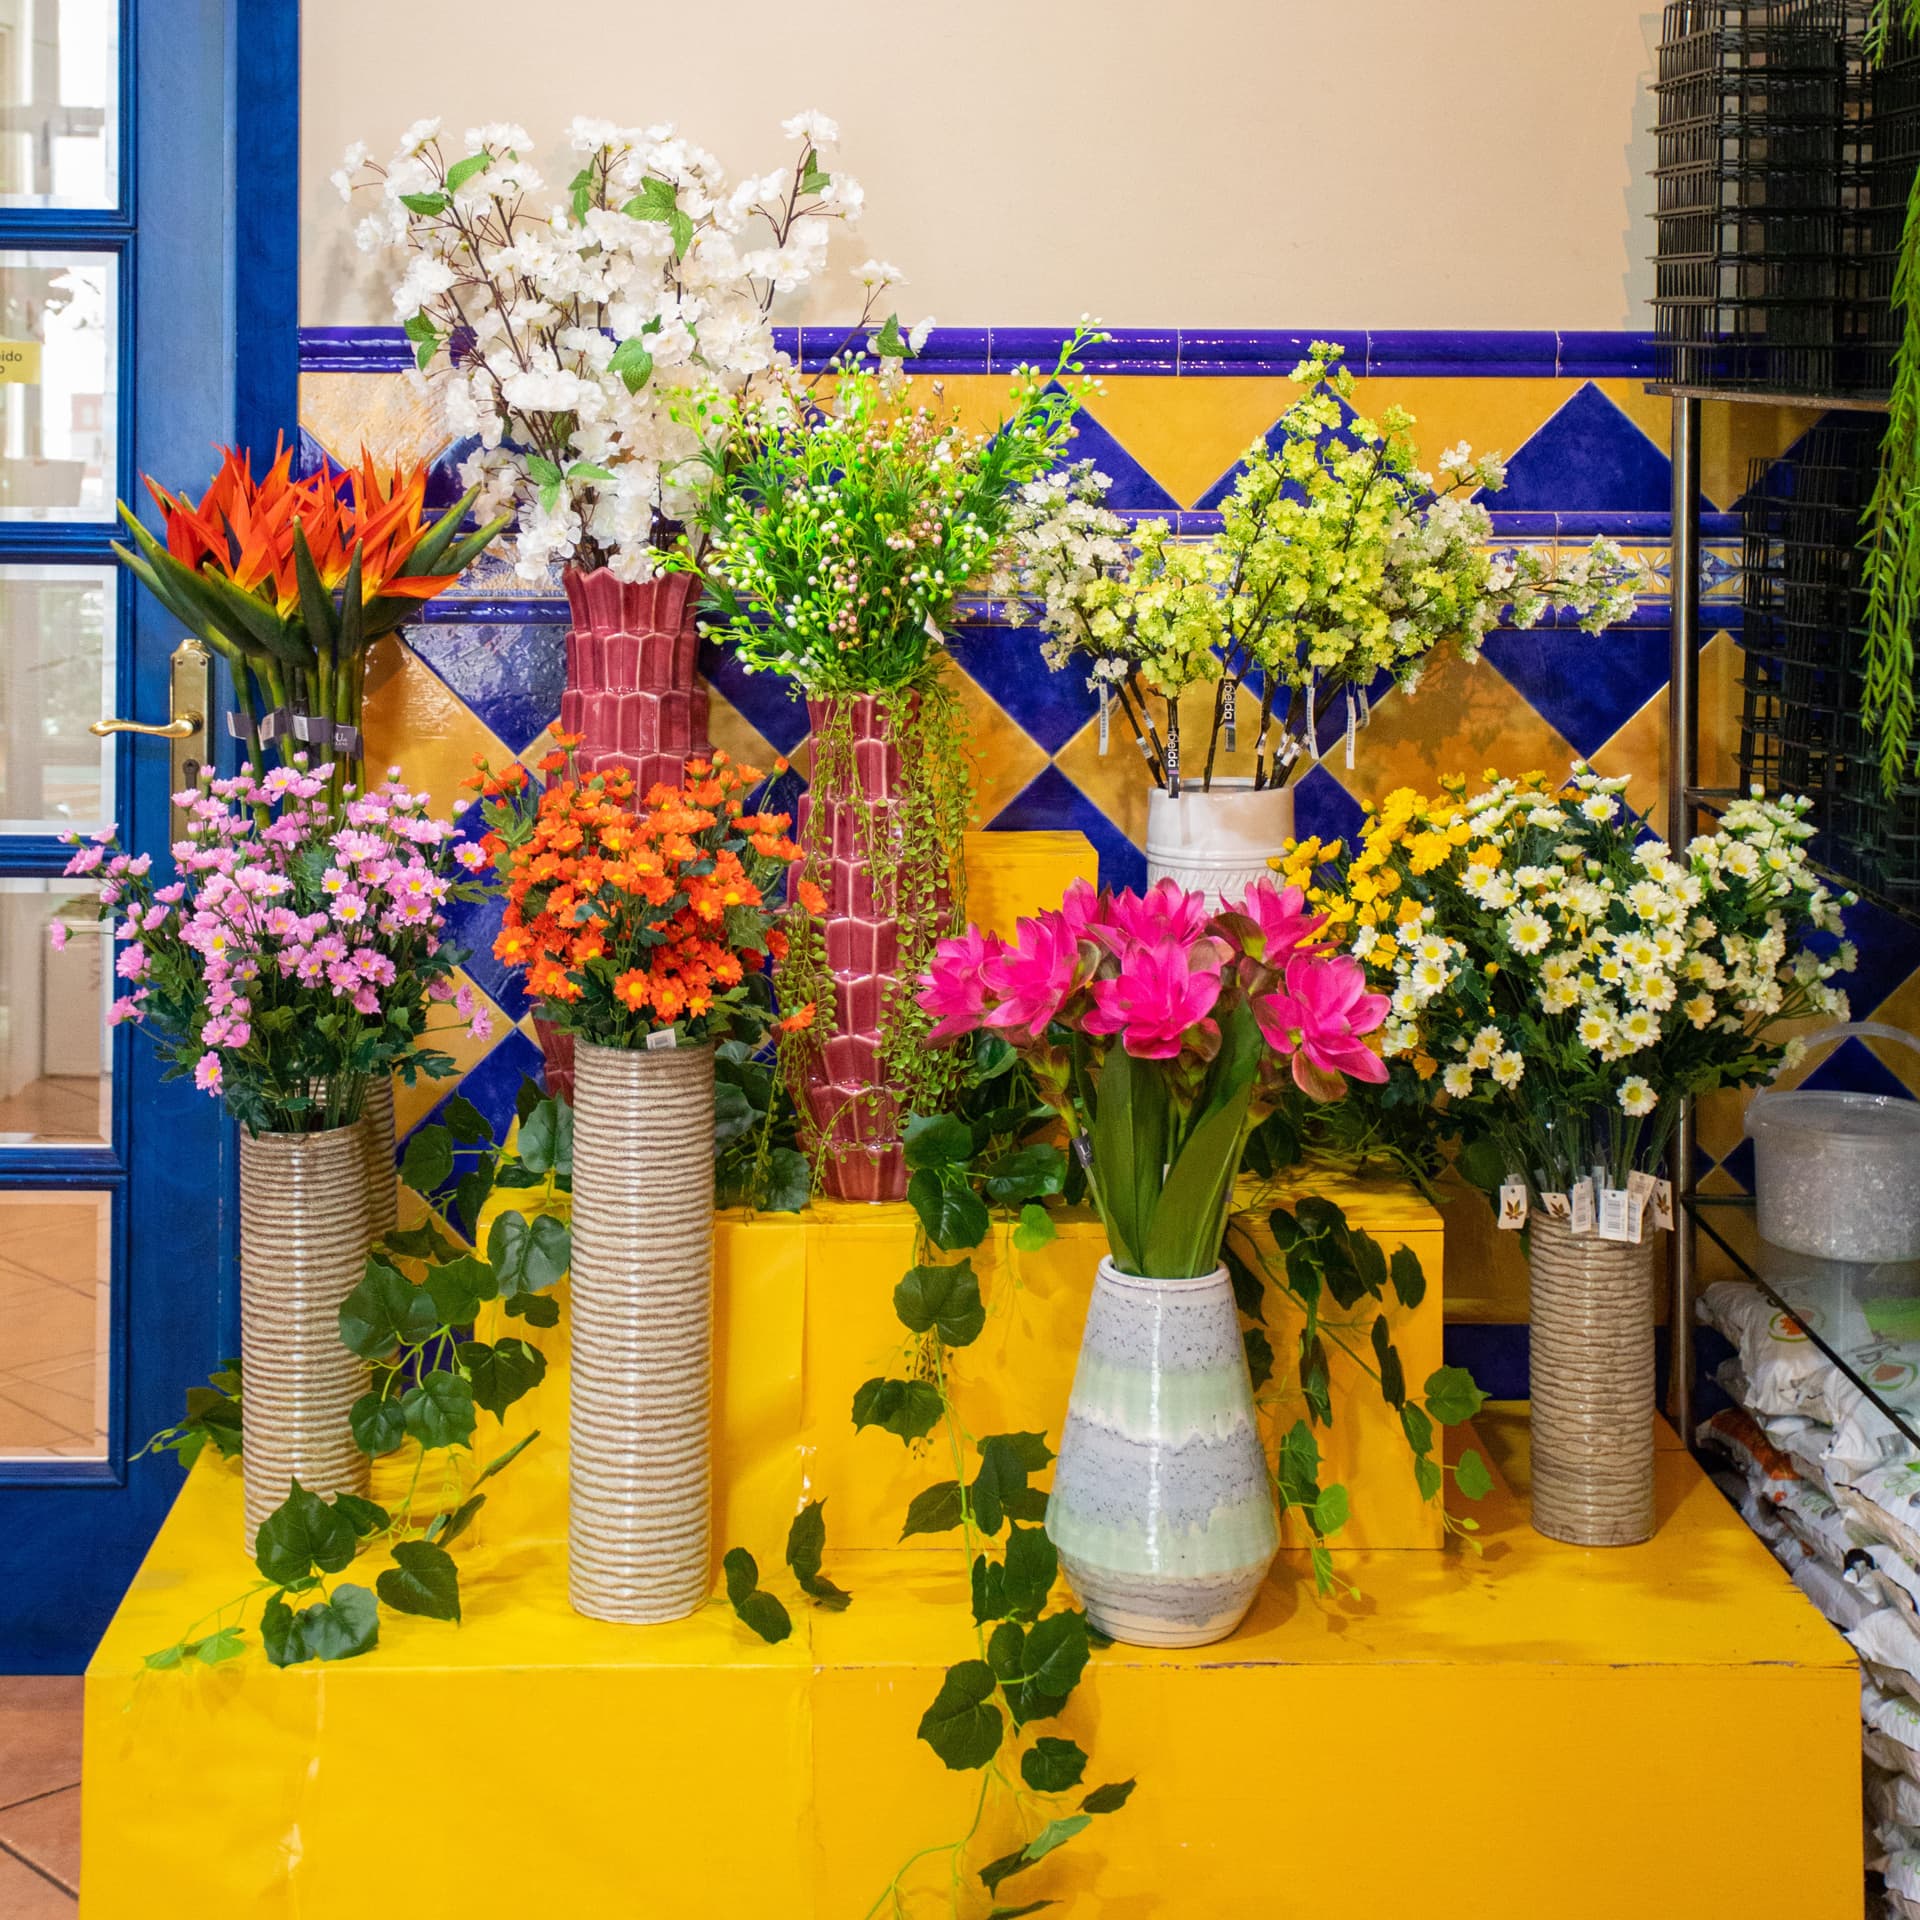  Encarga todo tipo de arreglos florales con Floristería San Pelayo